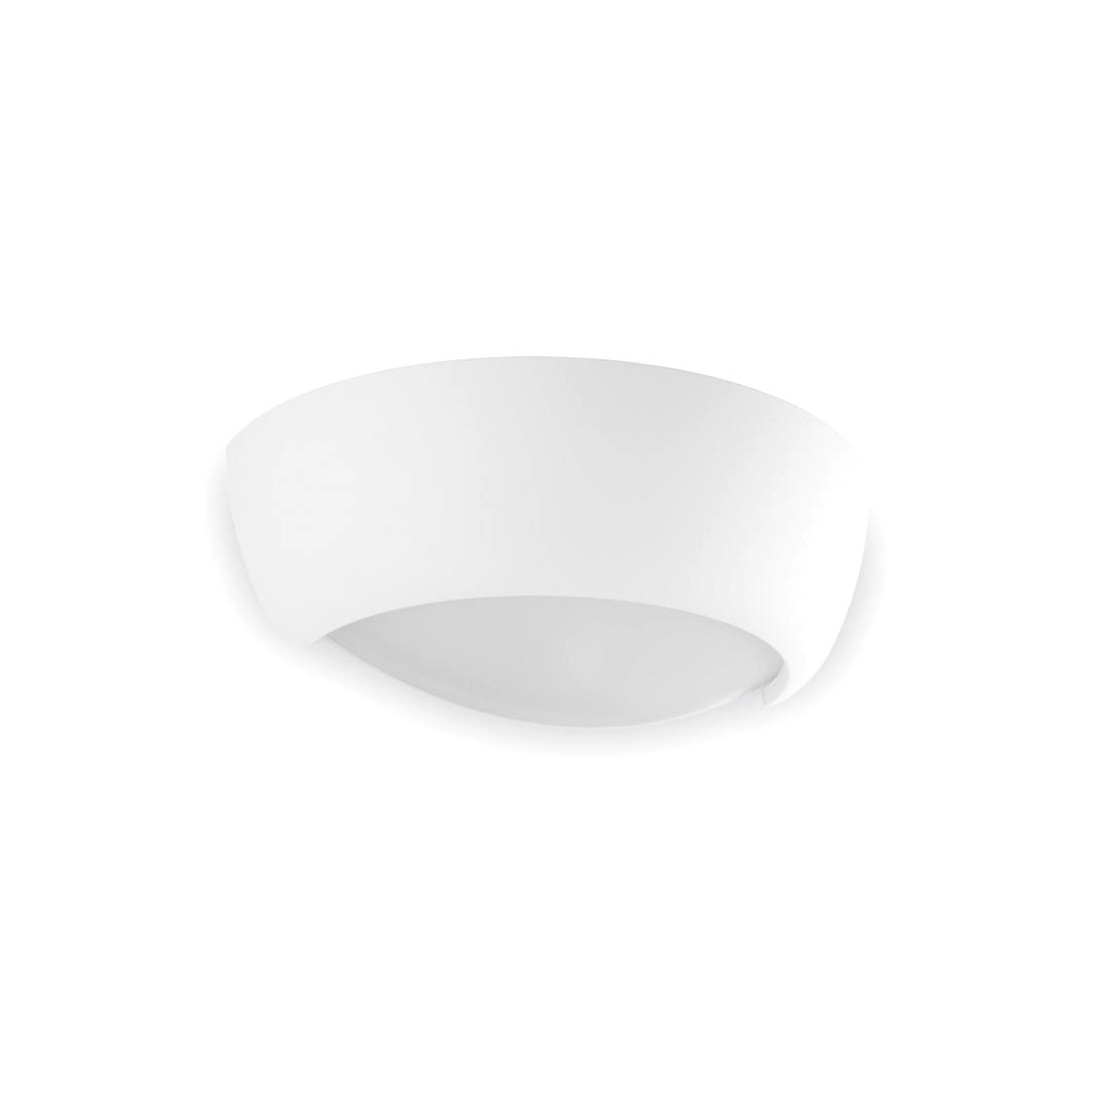 Applique BF-8215 53 R7s LED gesso bianco verniciabile biemissione lampada parete vaschetta vetro interno IP20